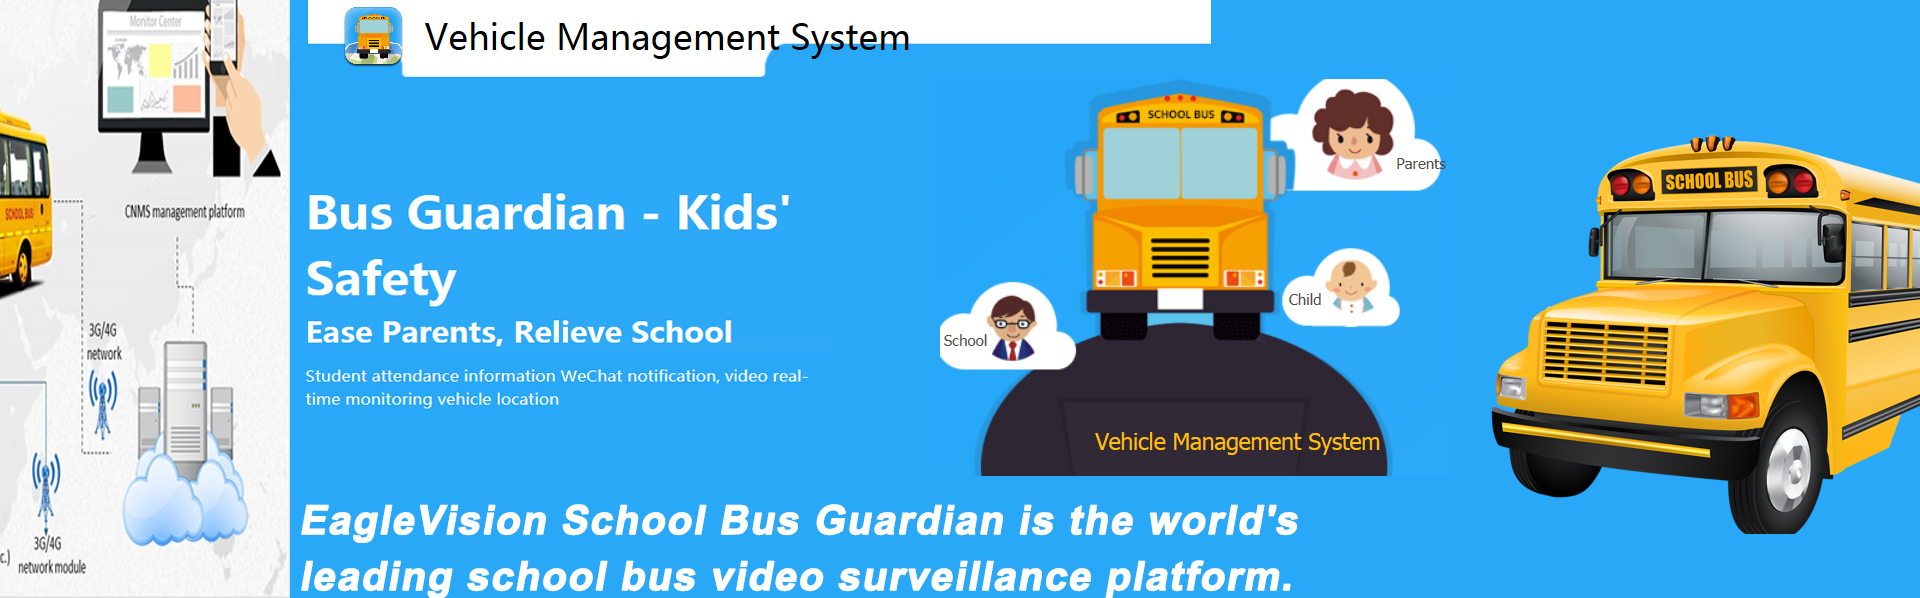 School bus video surveillance